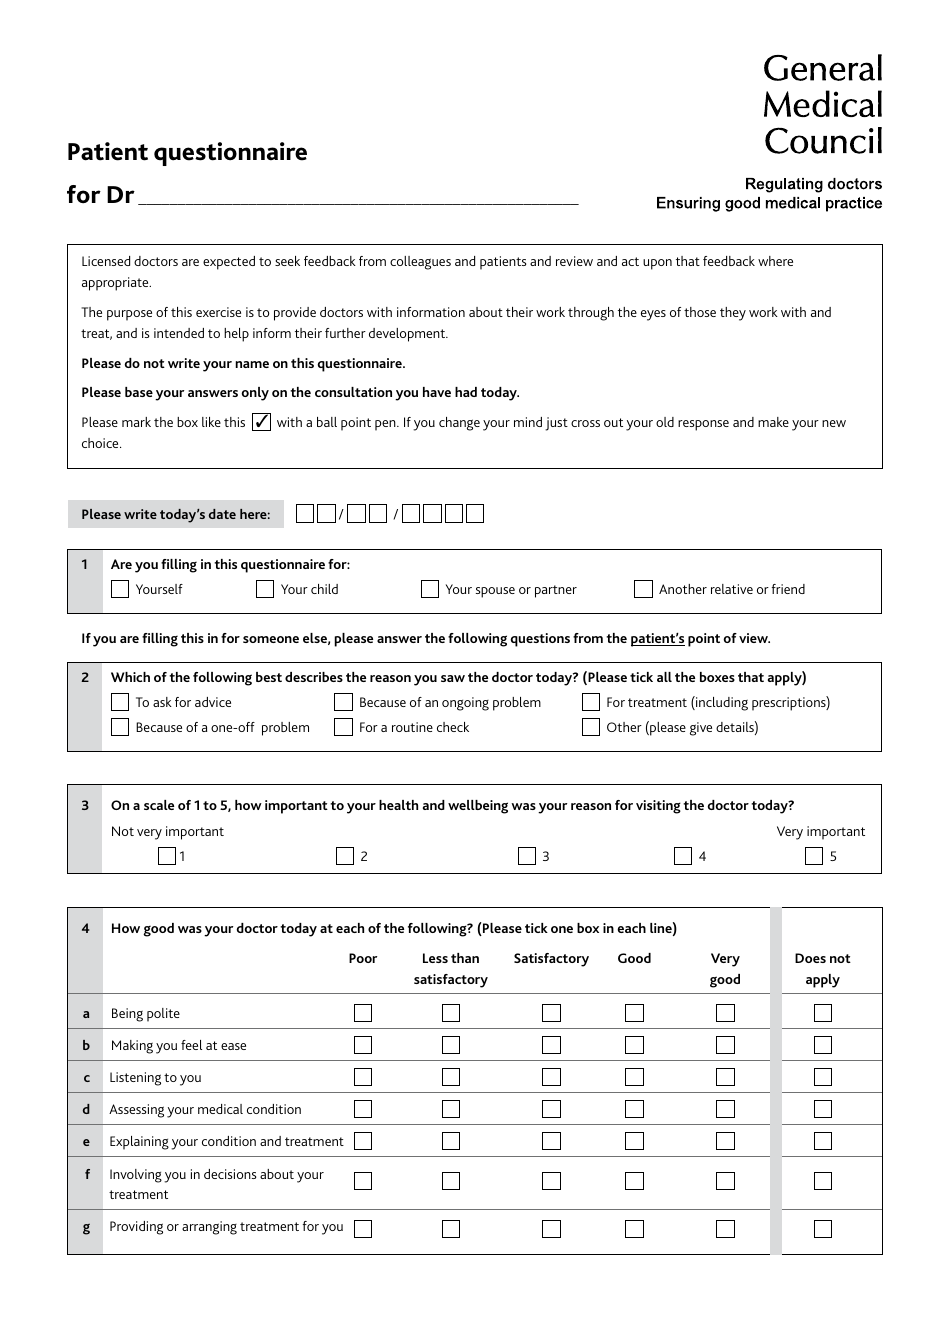 Patient Questionnaire by General Medical Council UK